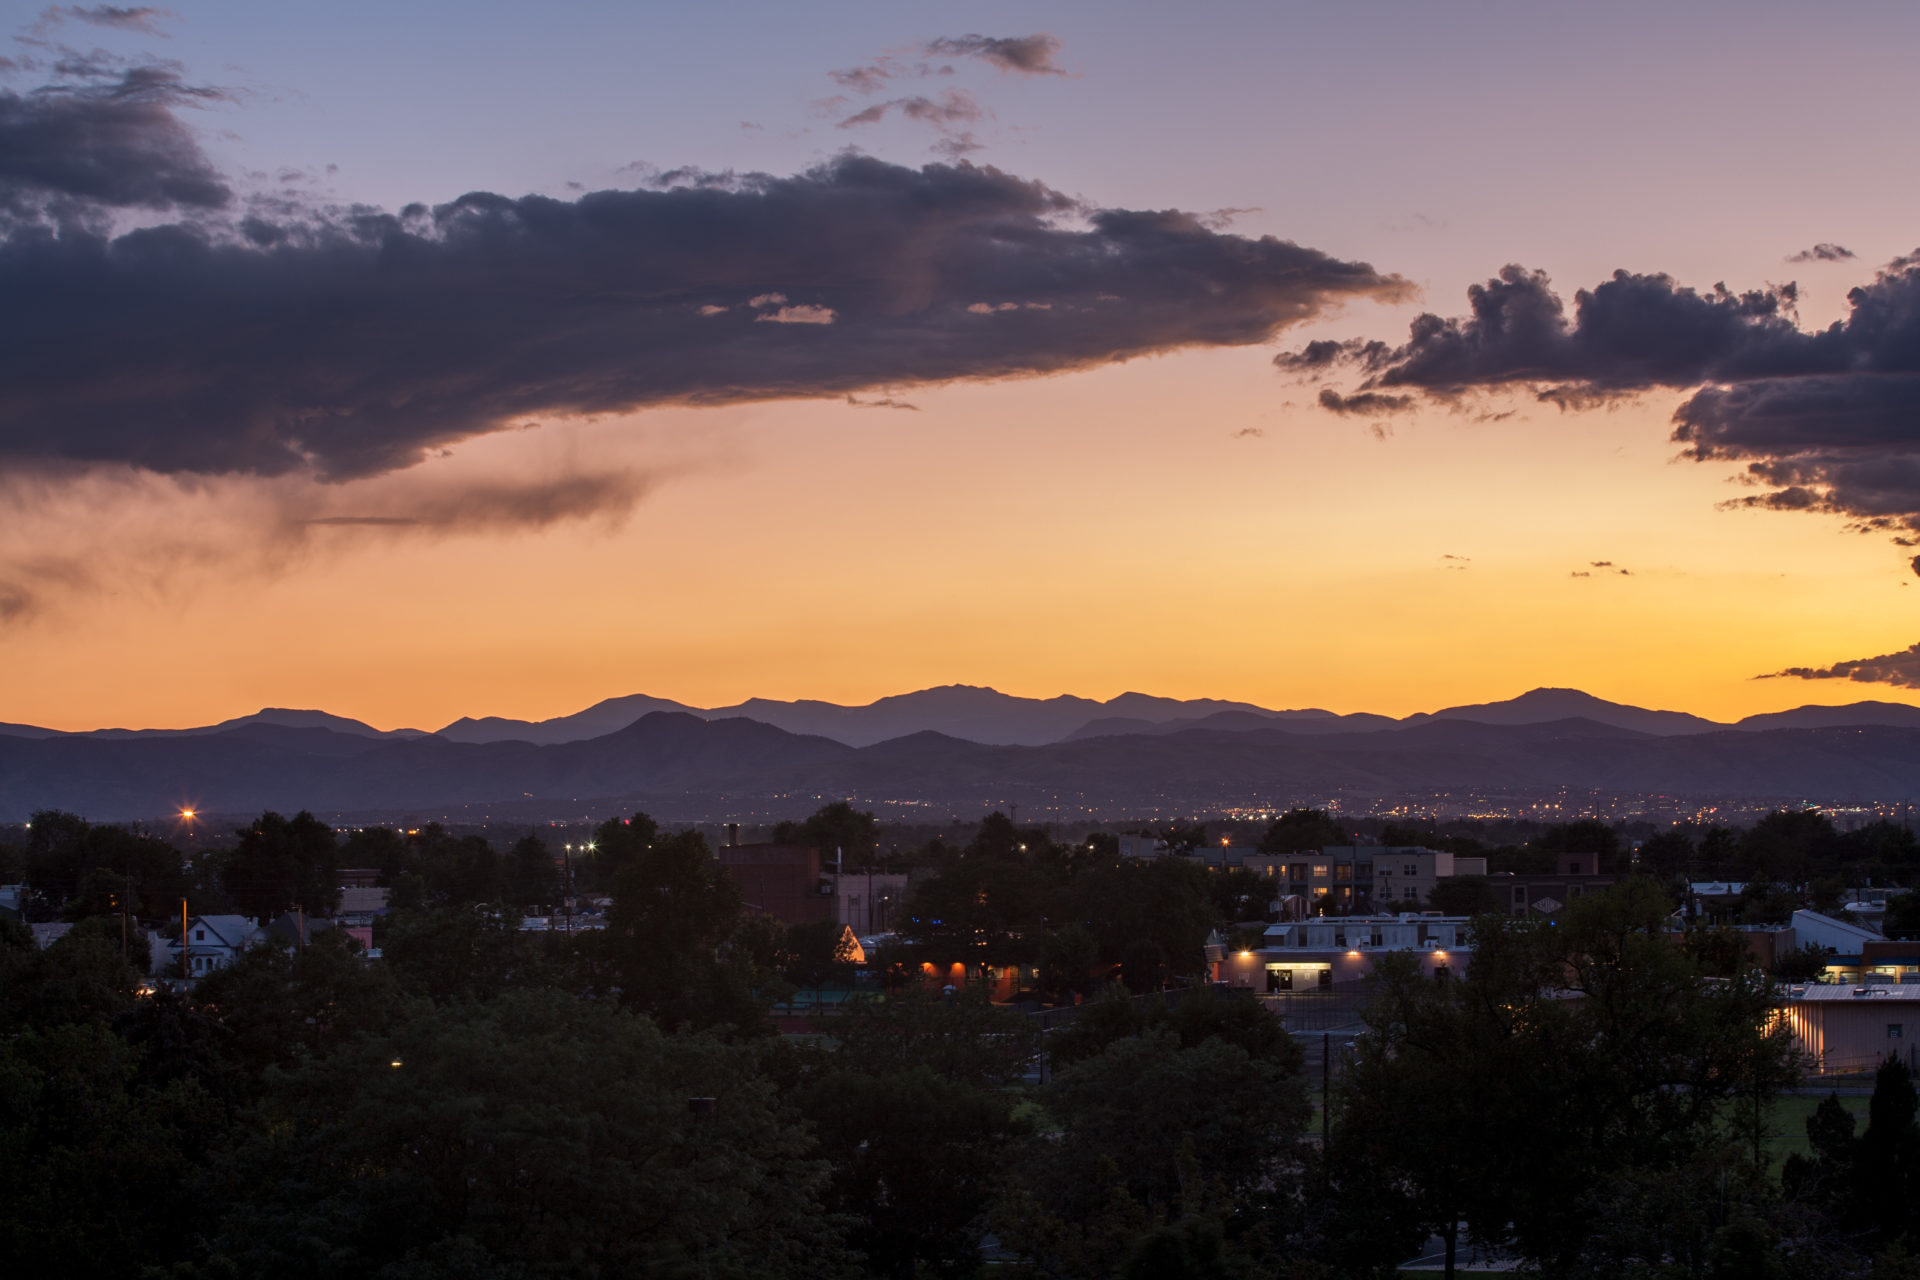 Mount Evans sunset - August 11, 2011